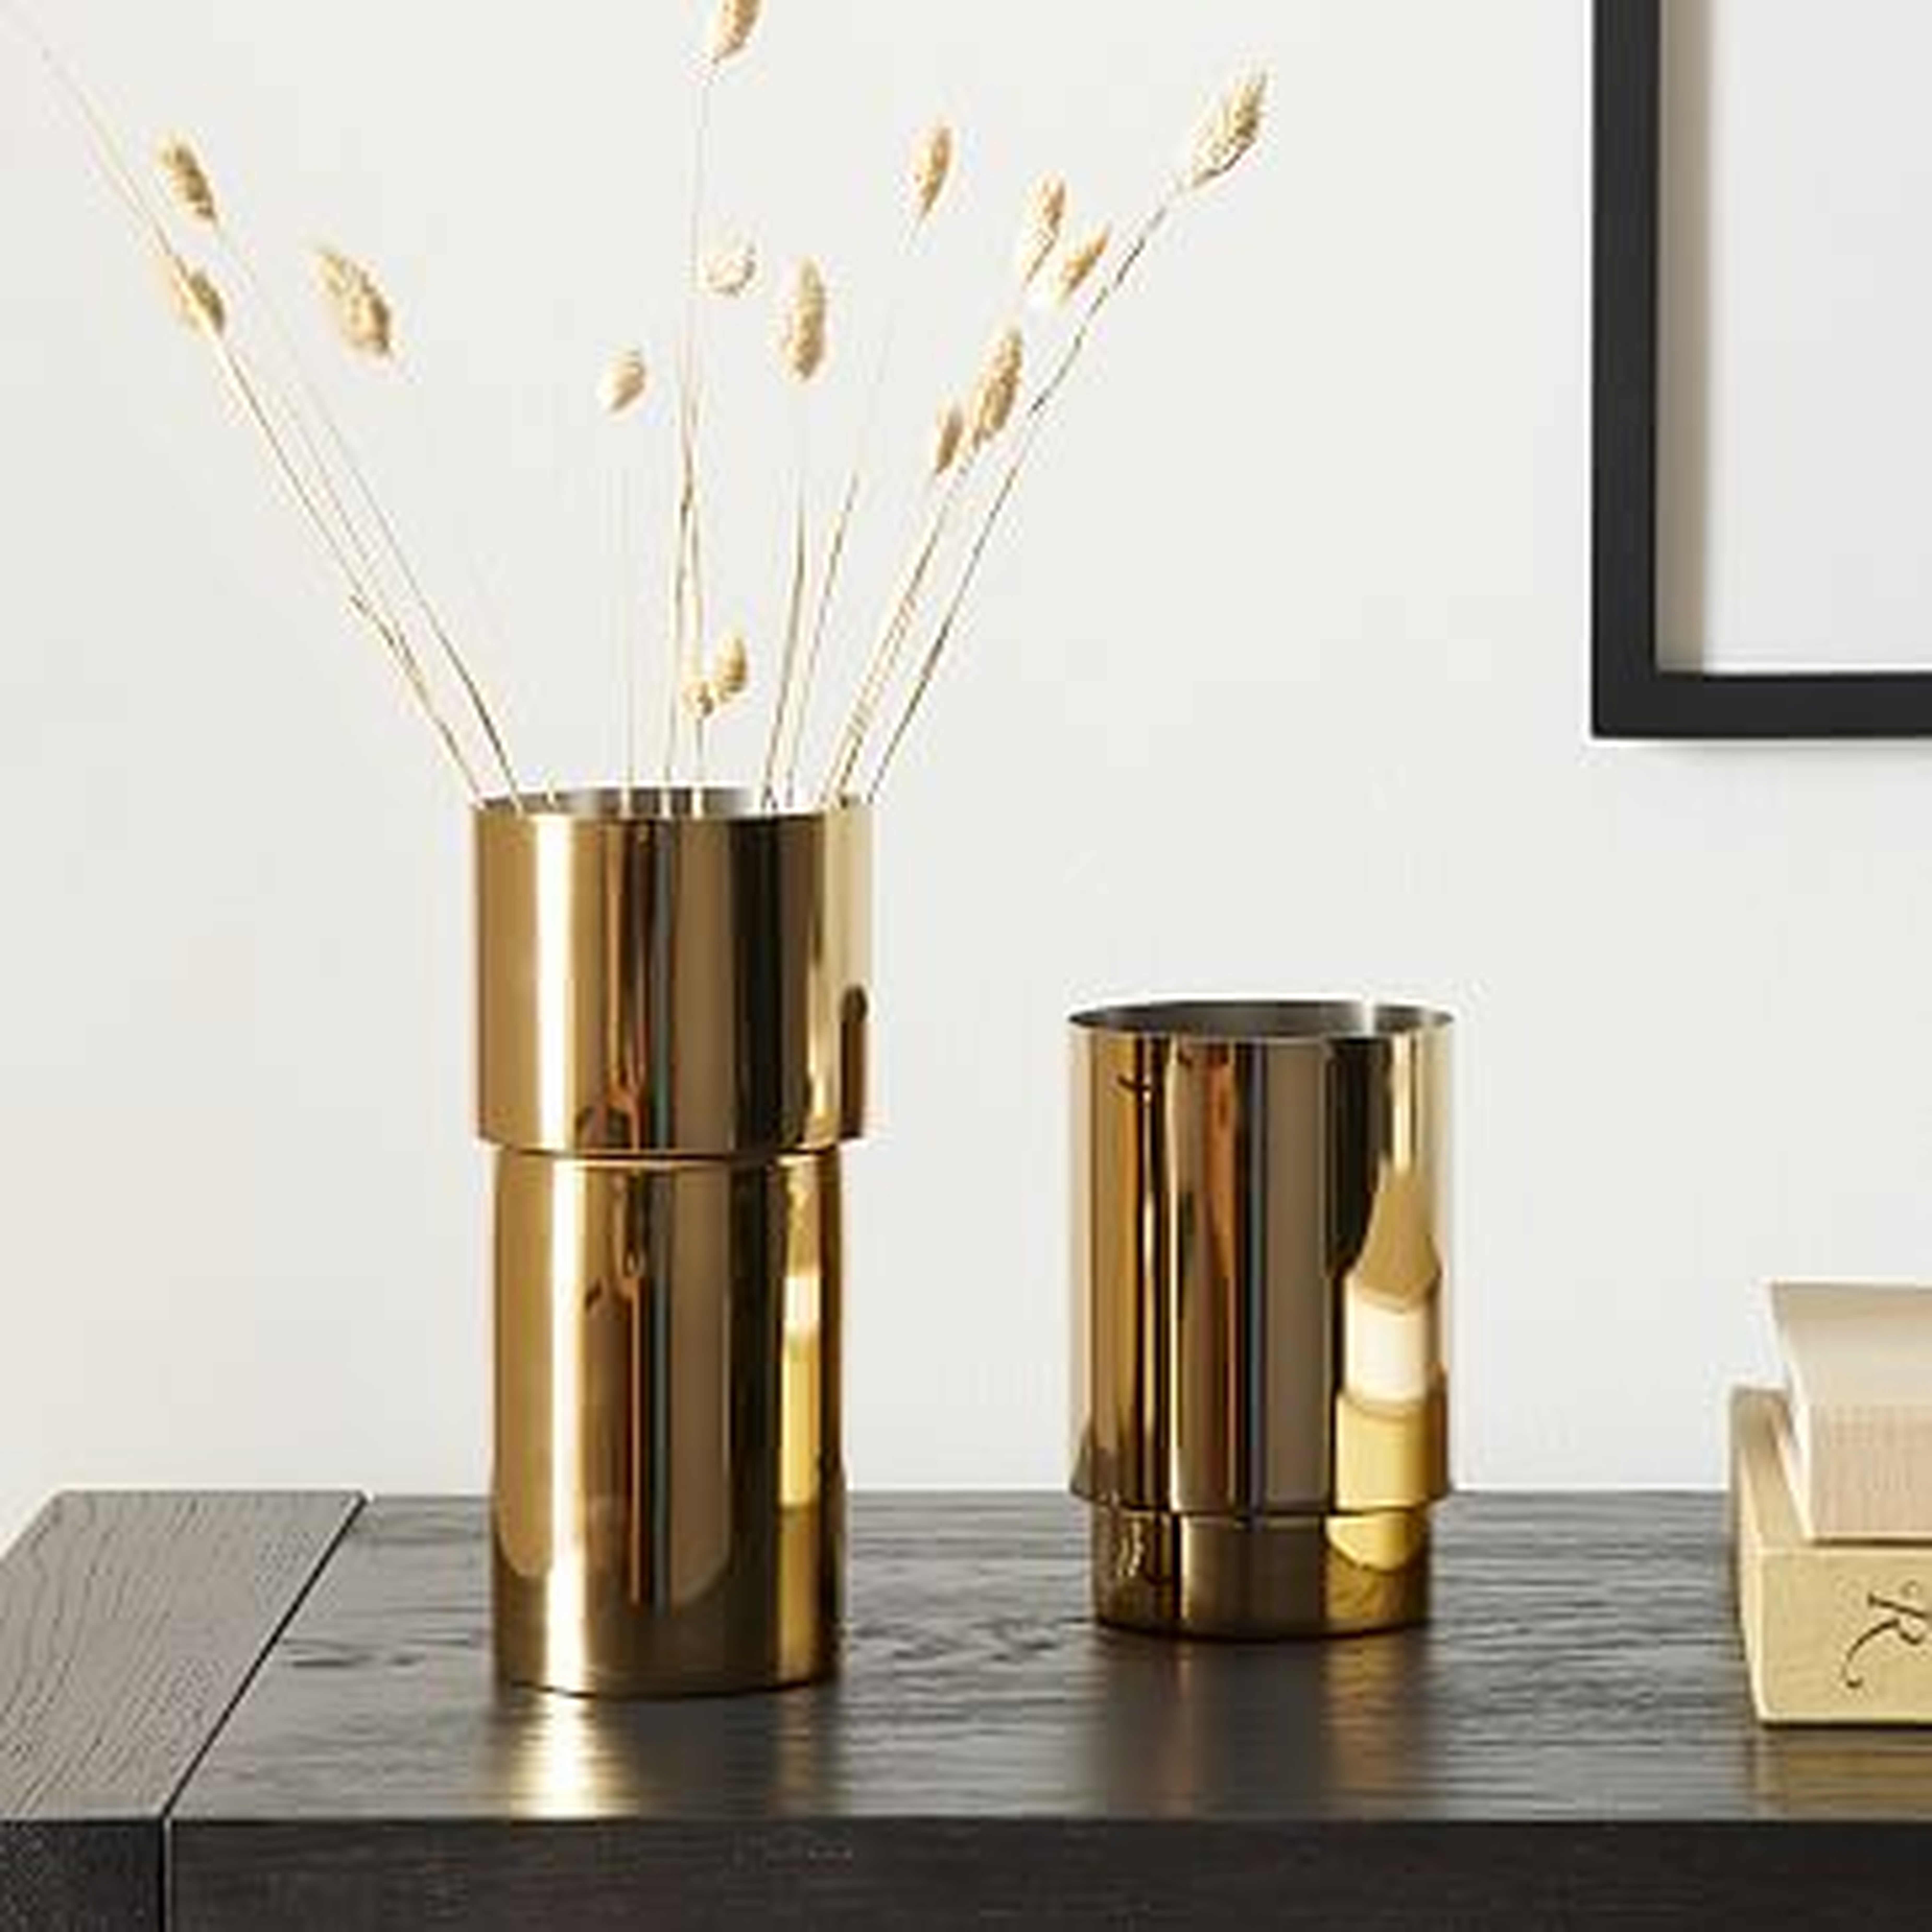 Brass And Enamel Tube Vase, Polished Brass, Small And Medium, Set of 2 - West Elm